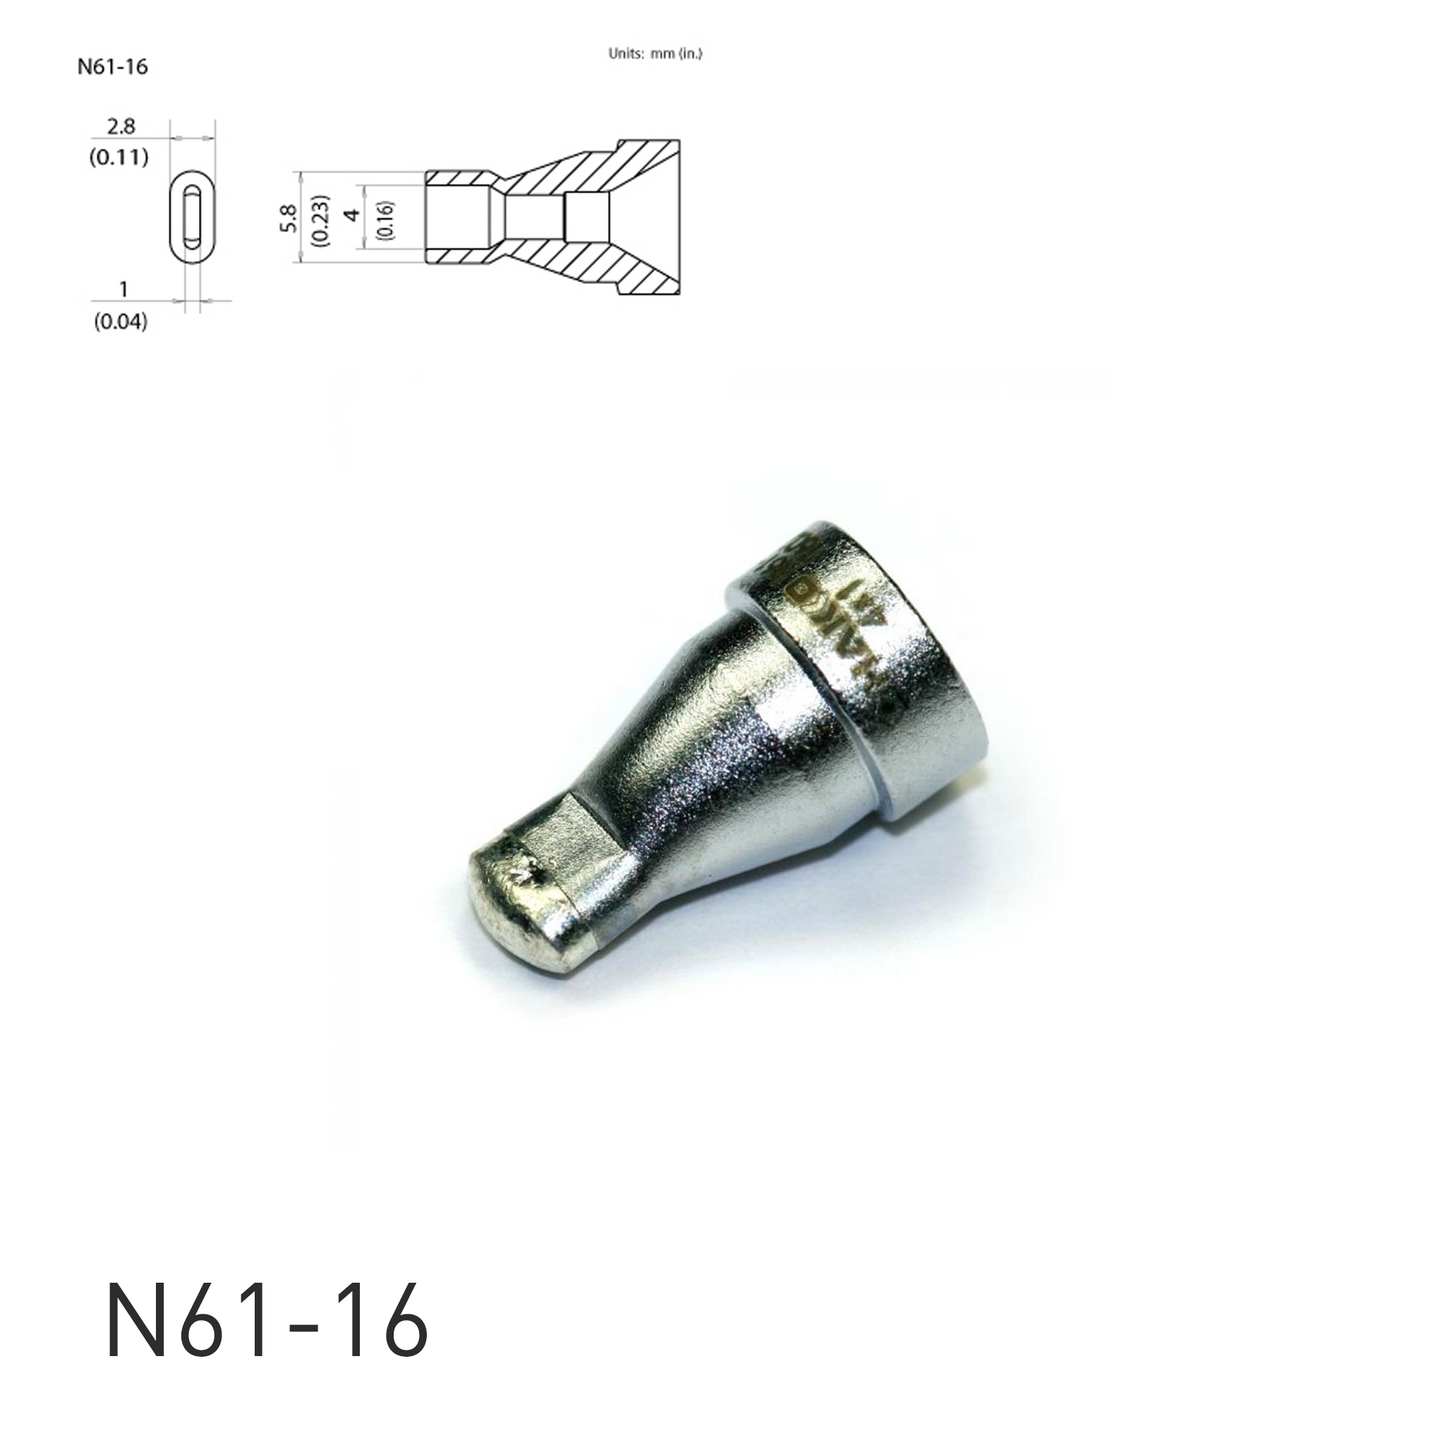 N61-16 Nozzle 4 x 1.0 mm